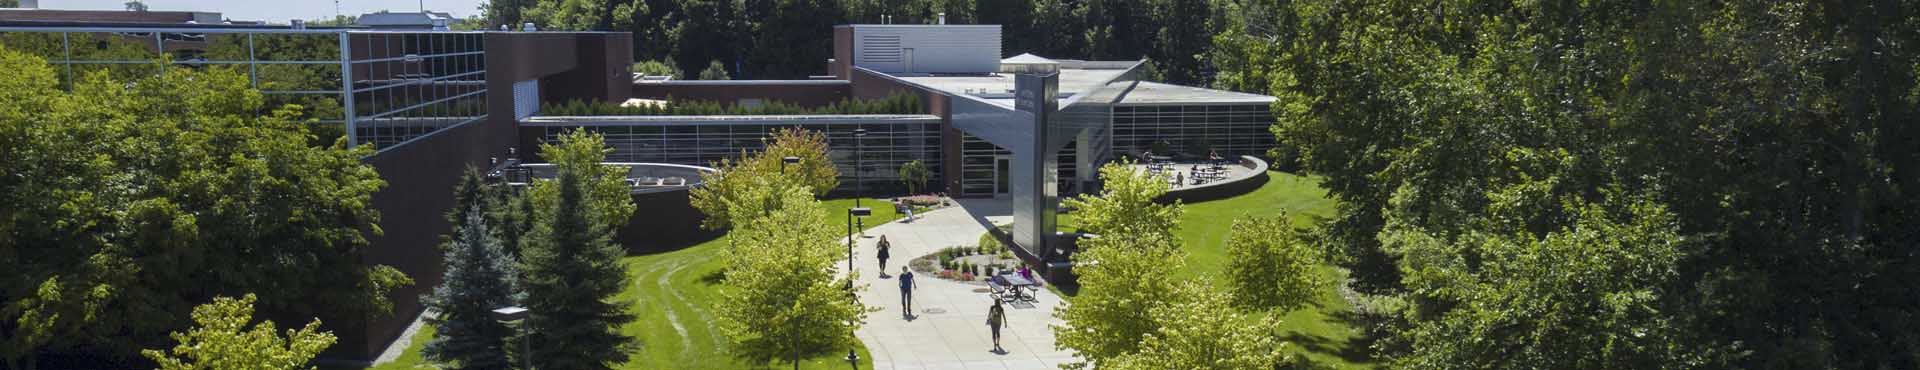 student stories center campus